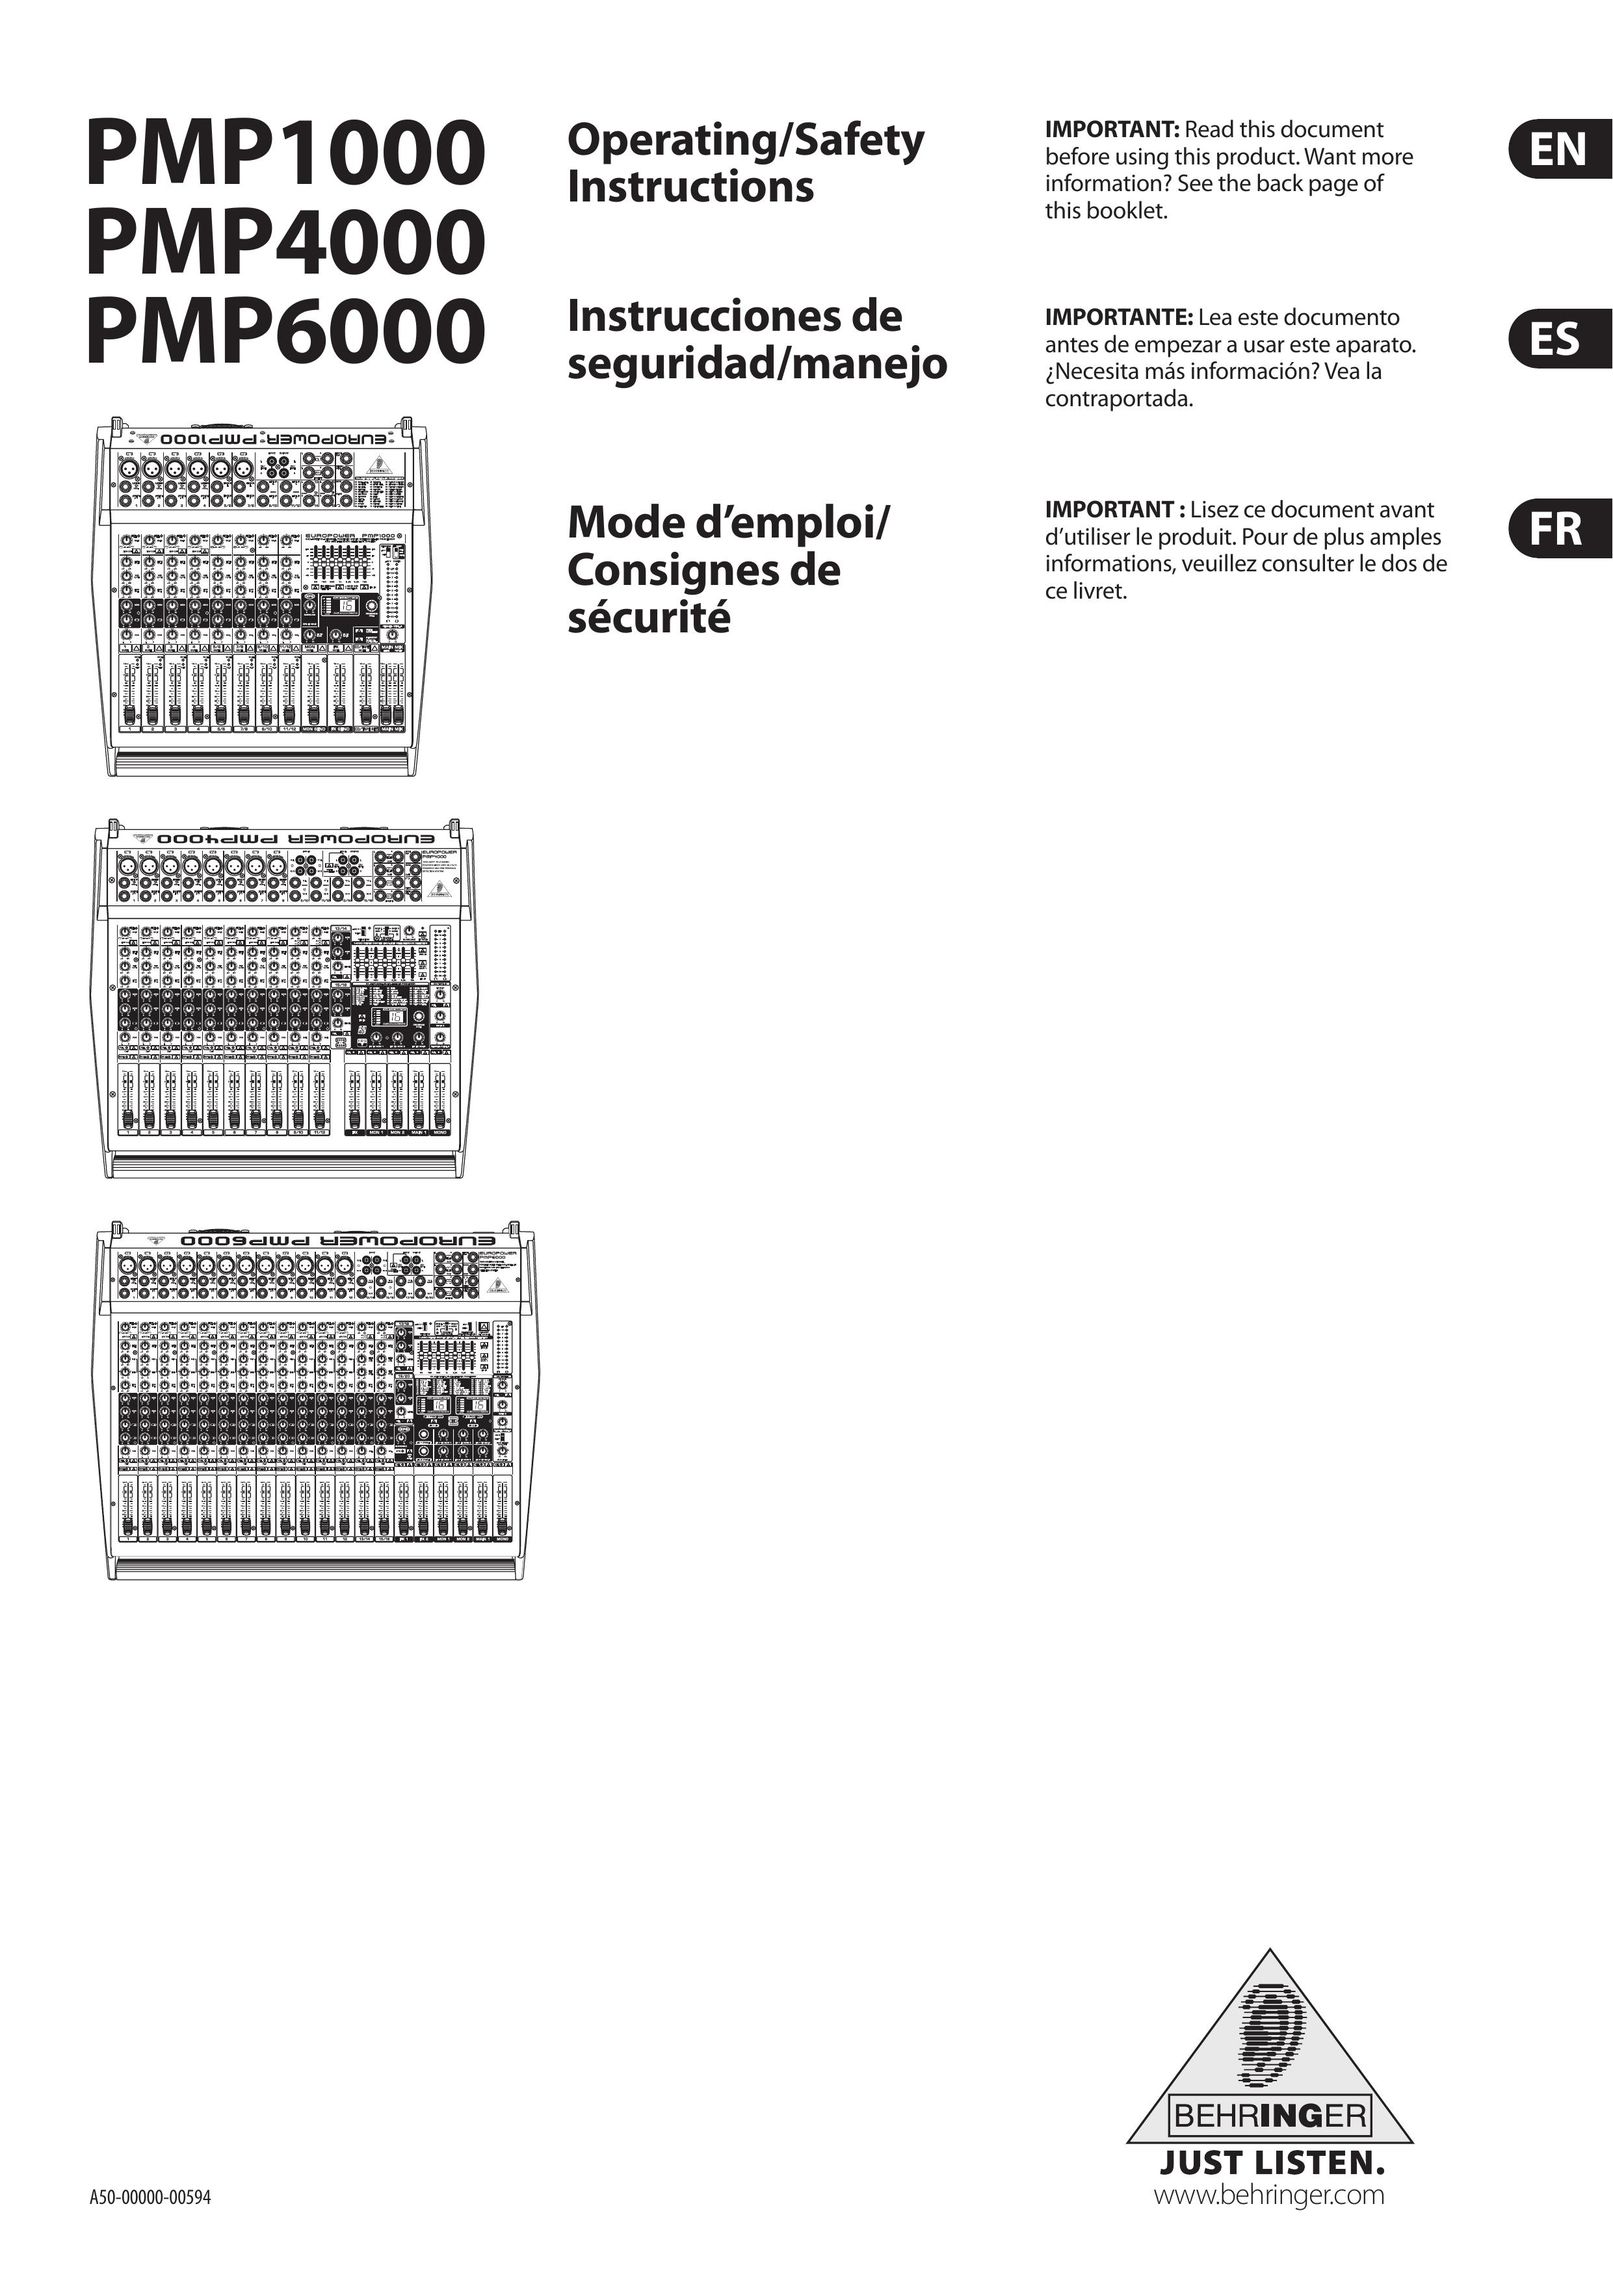 Behringer PMP4000 Mixer User Manual